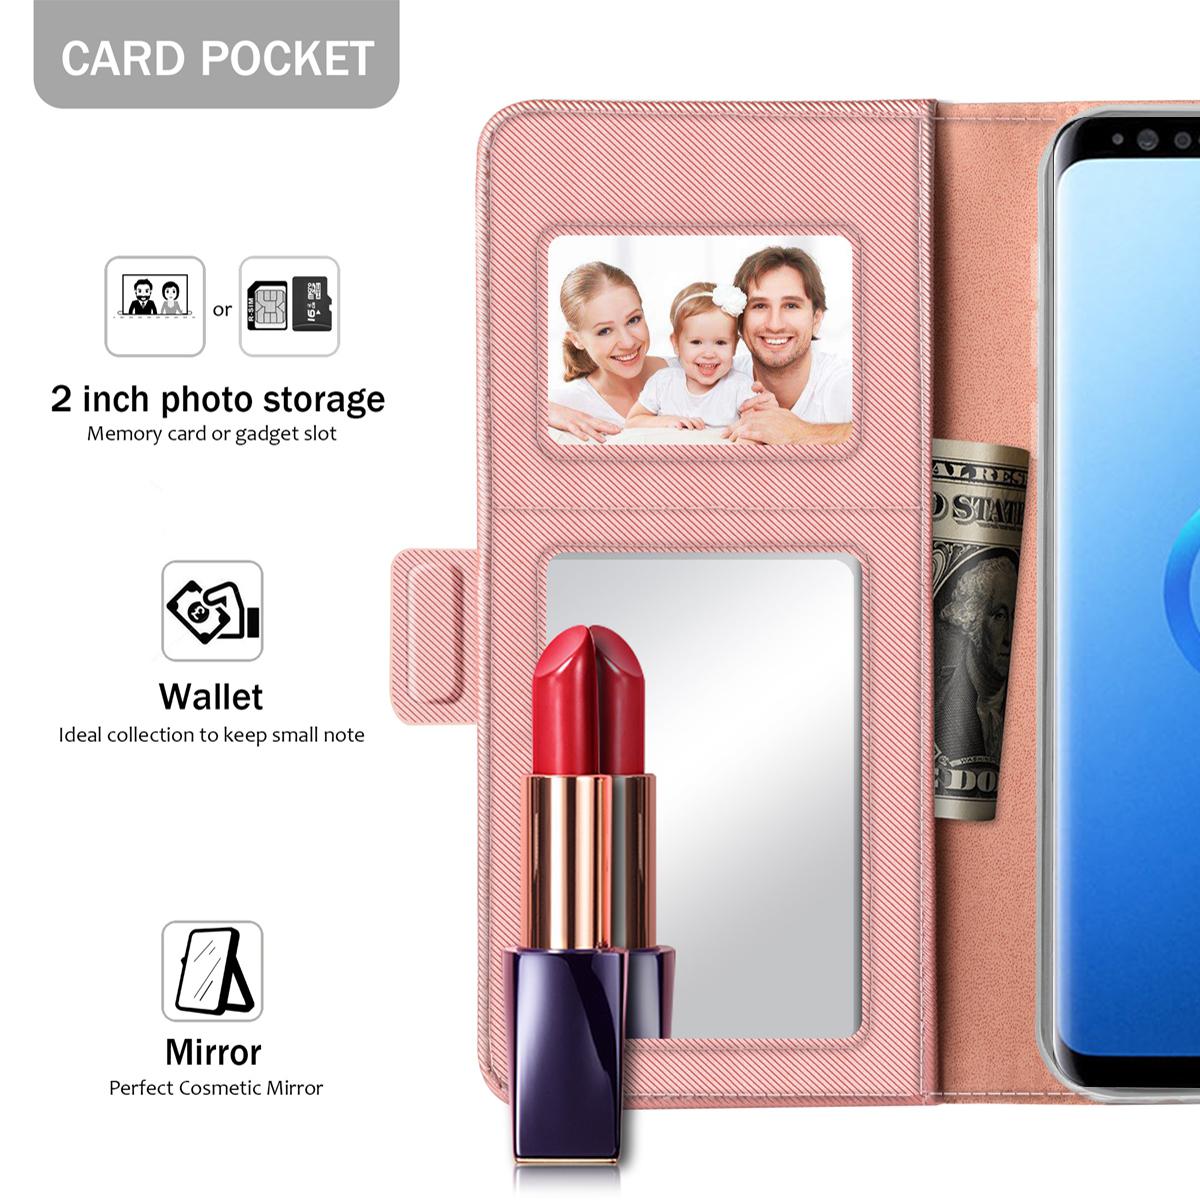 Funda con solapa Espejo Samsung Galaxy S9 Pink Gold